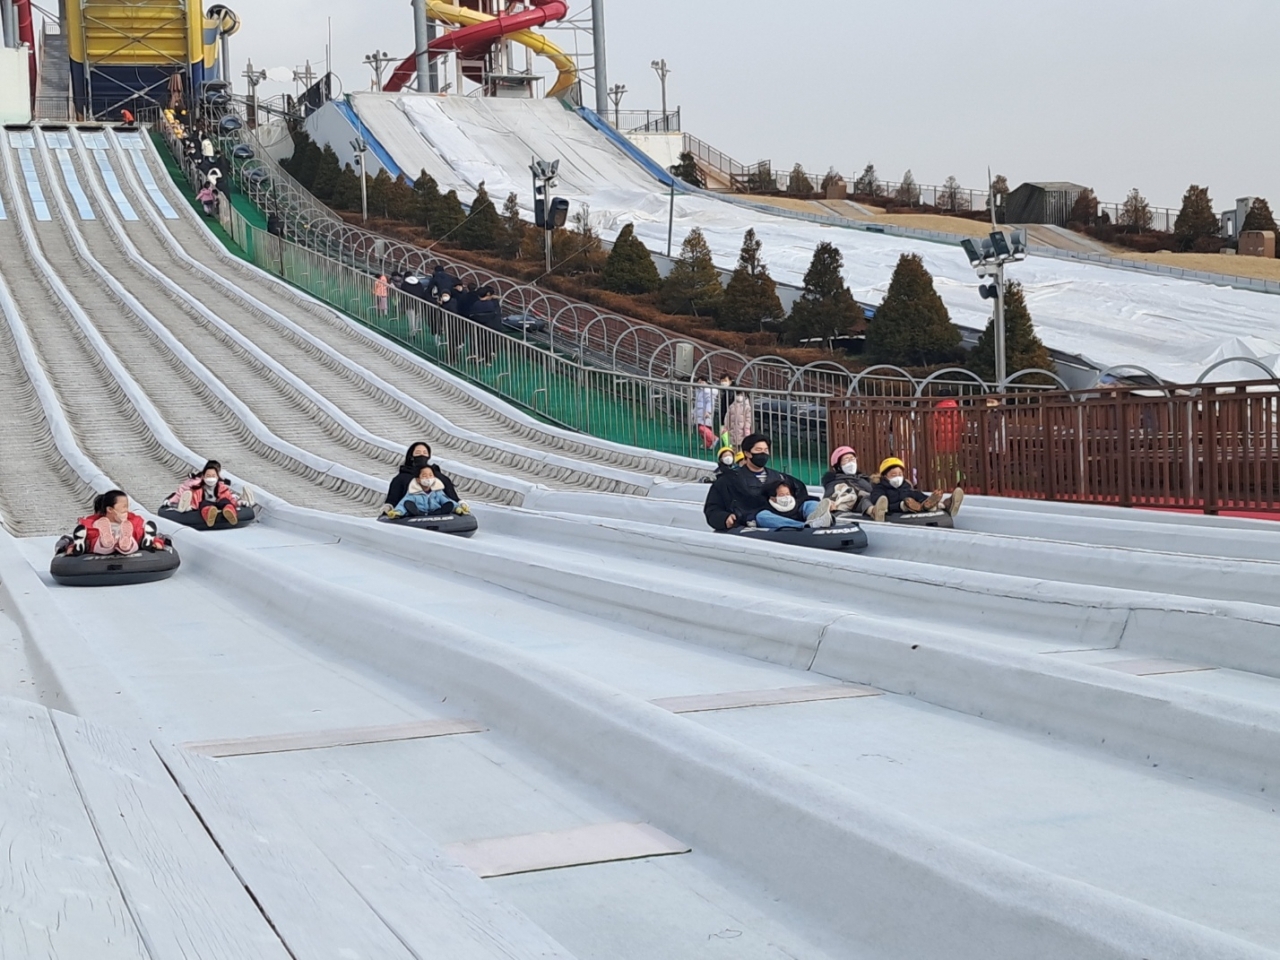 Sledding slopes outside One Mount Snow Park (Lee Si-jin/The Korea Herald)